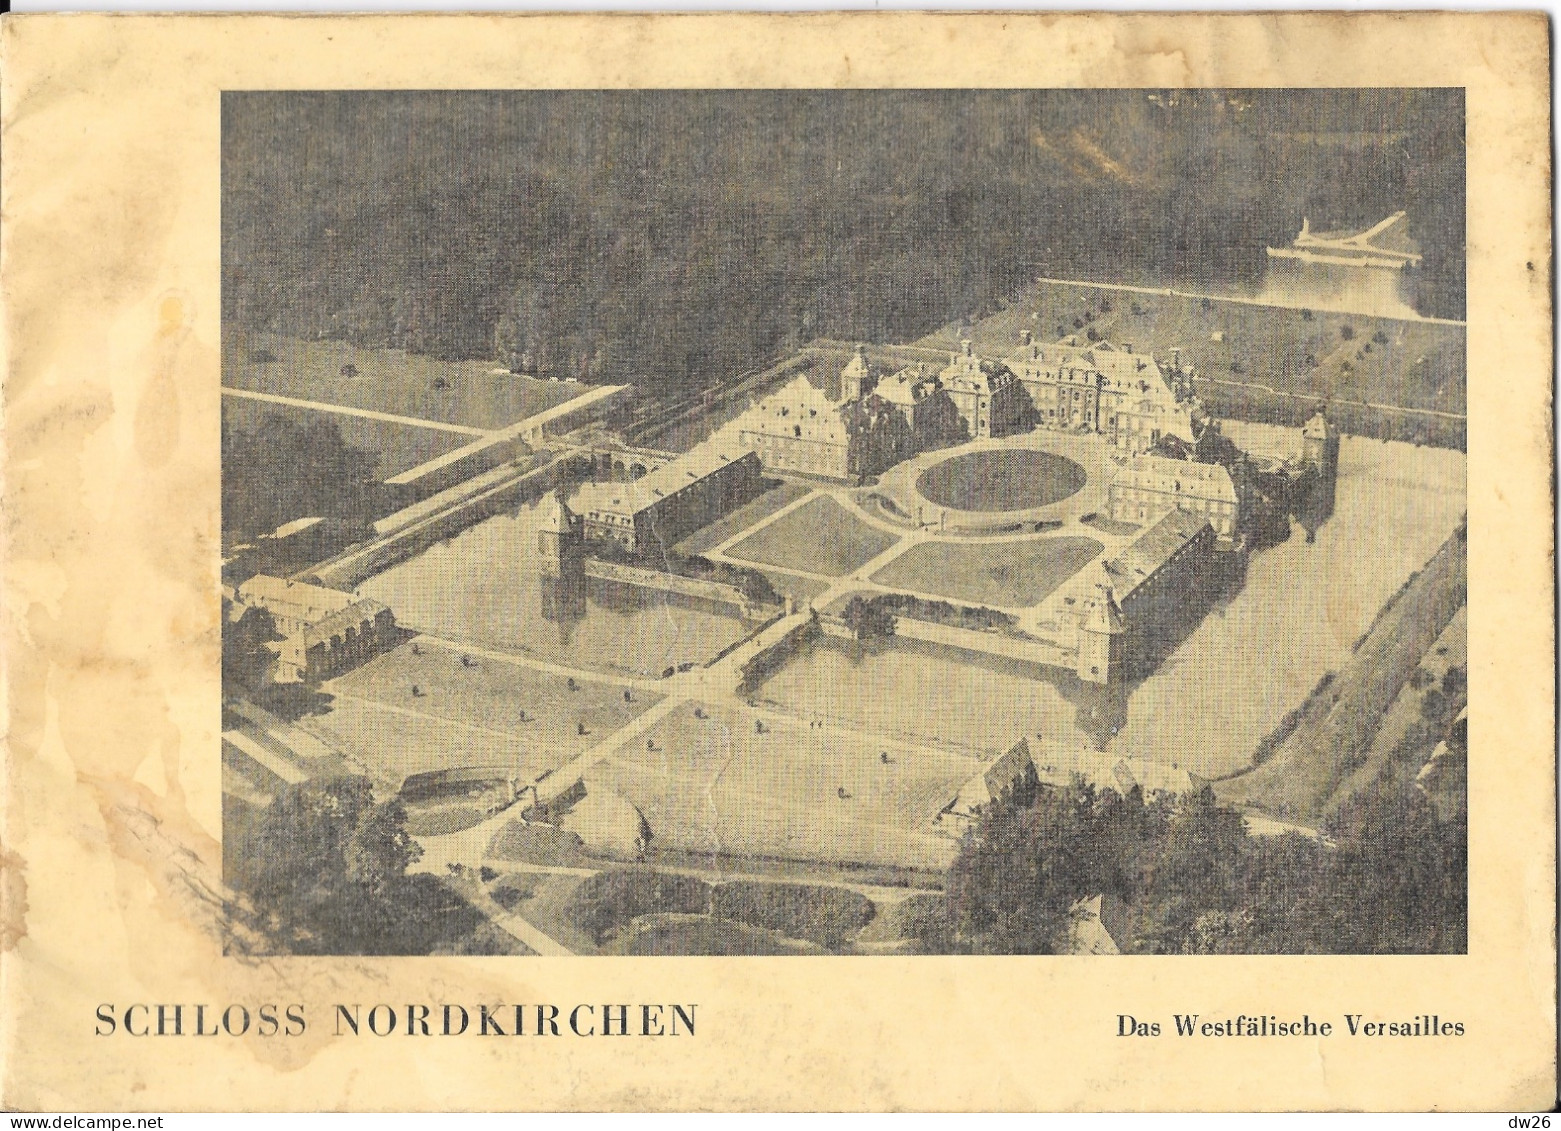 Dépliant Touristique: Schloss Nordkirchen (Das Westfälische Versailles) Le Versailles Allemand, Livret 20 Pages - Reiseprospekte